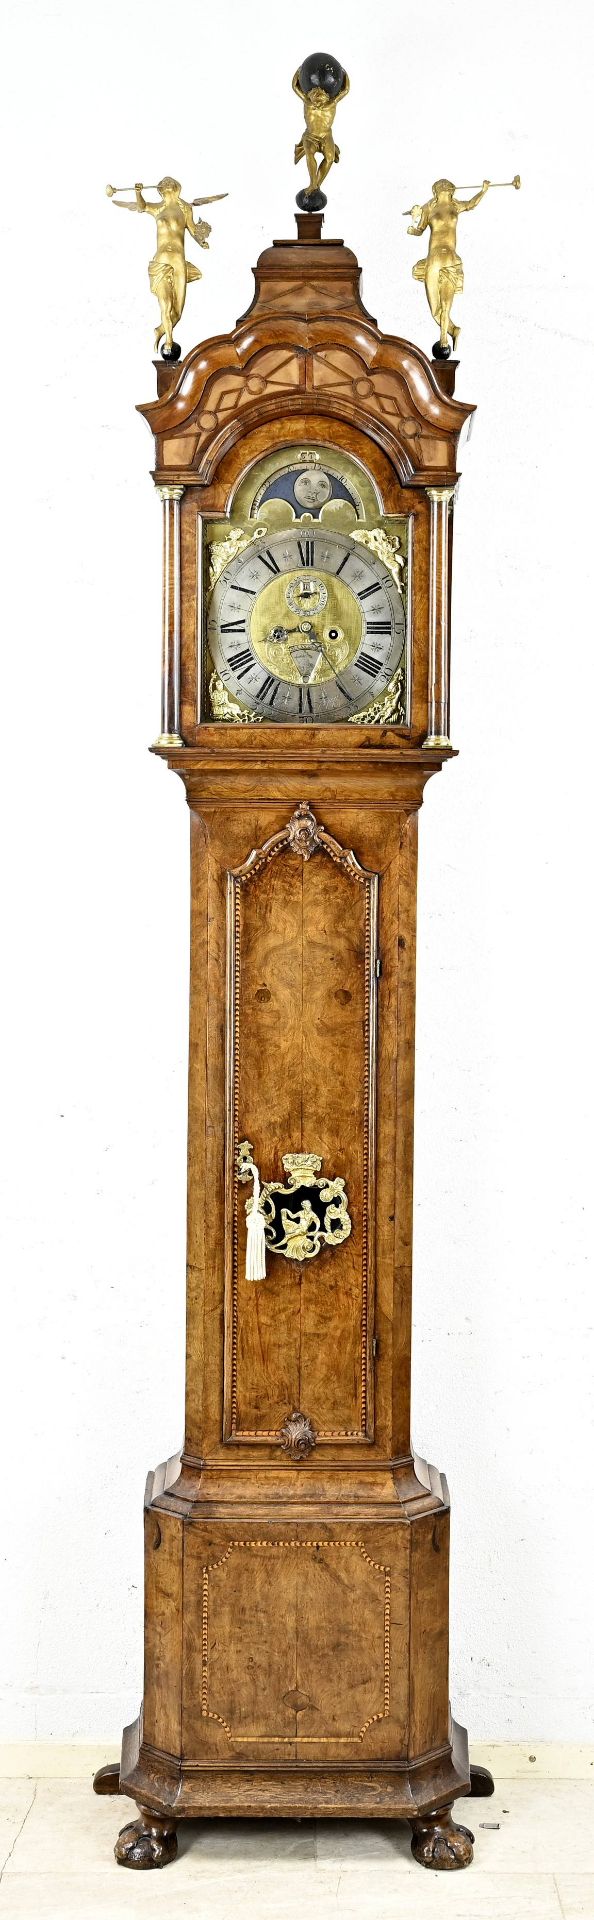 Amsterdam grandfather clock, H 270 cm.